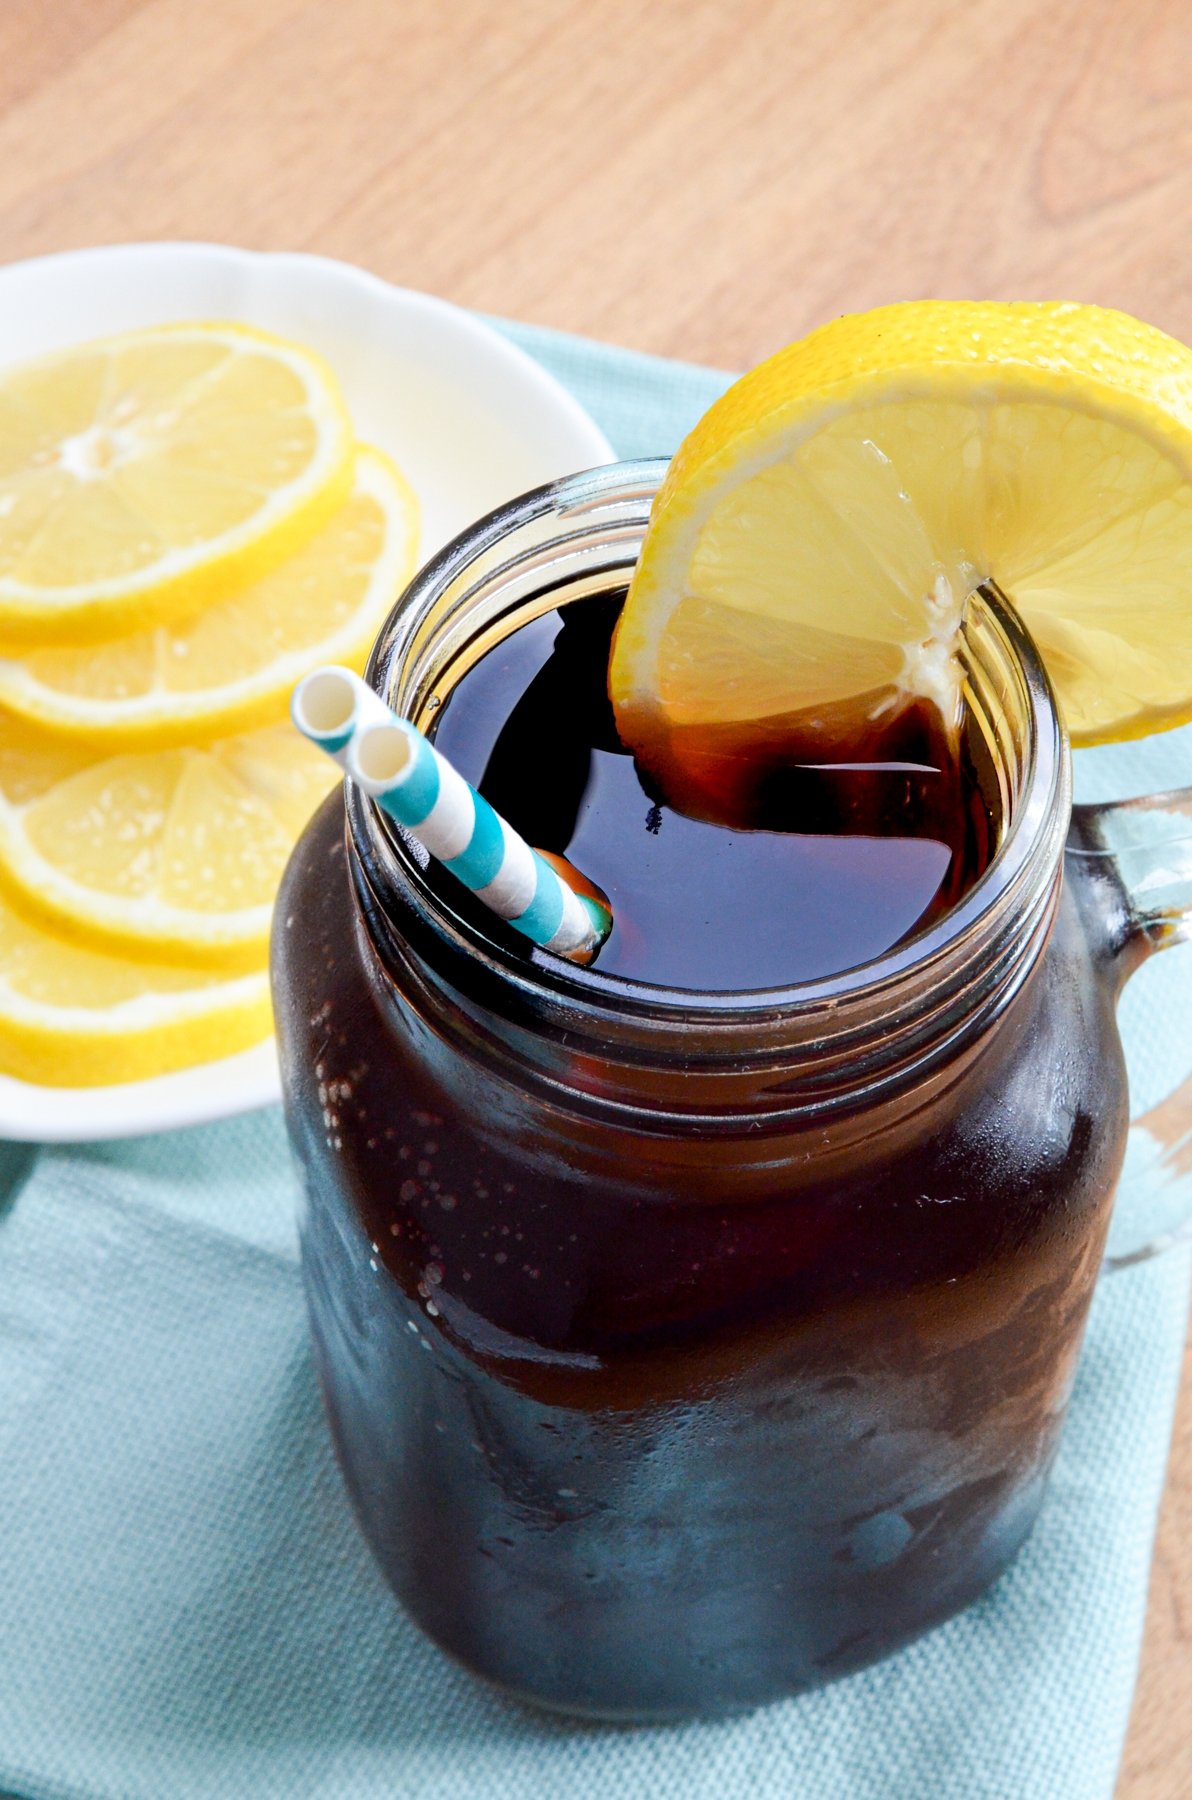 A glass of iced sweet tea, garnished with a lemon slice.